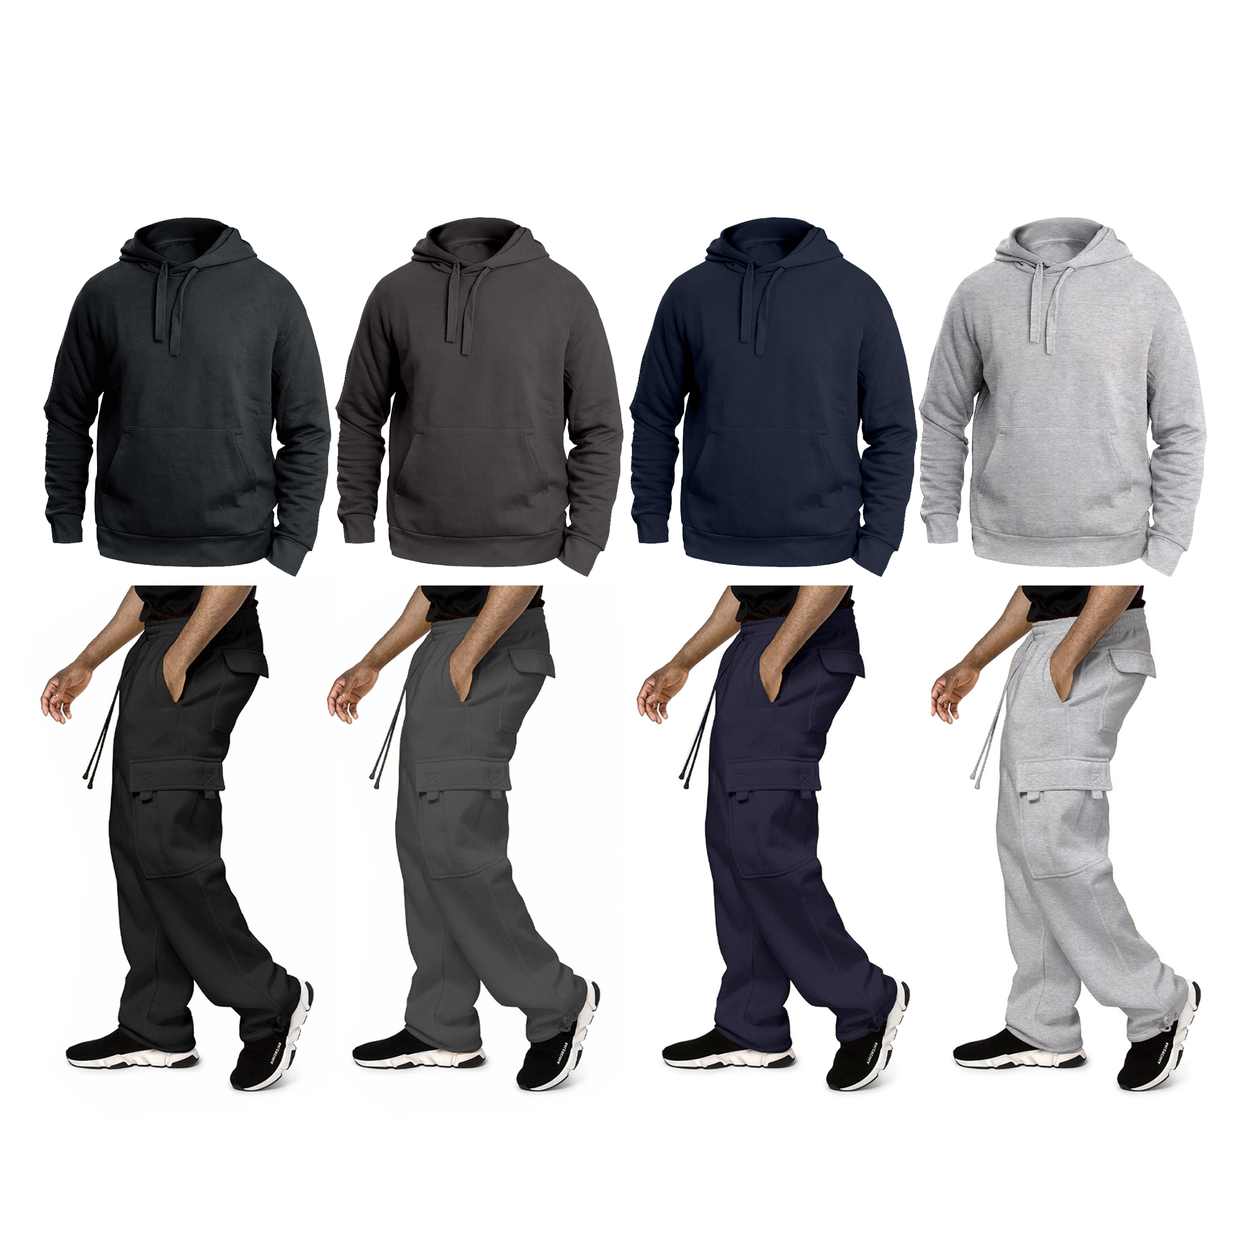 Multi-Pack: Big & Tall Men's Winter Warm Cozy Athletic Fleece Lined Multi-Pocket Cargo Sweatsuit - Grey, 2-pack, X-large